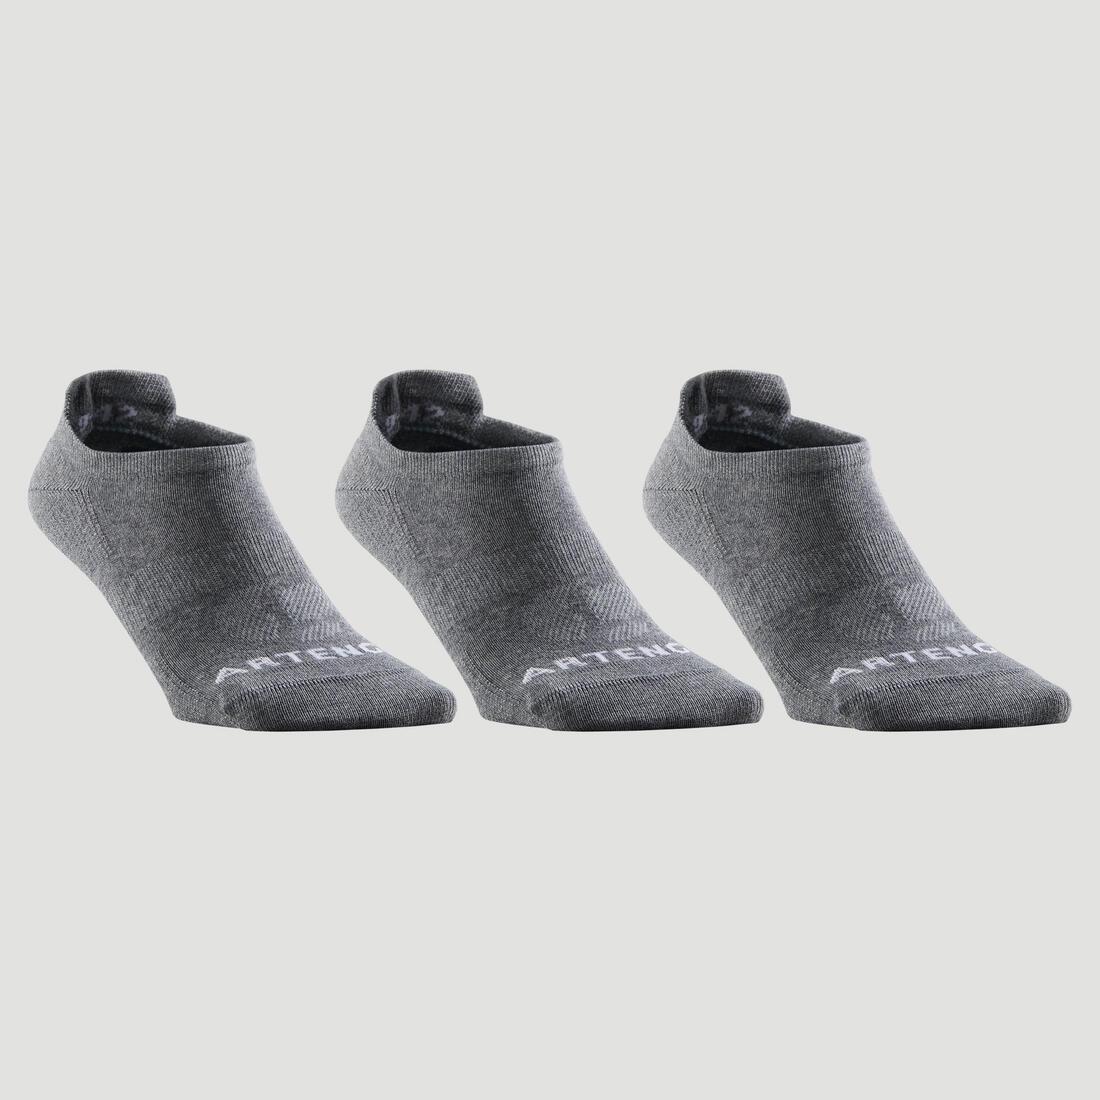 ARTENGO - Unisex Rs 160 Low Sports Socks Tri-Pack, Granite